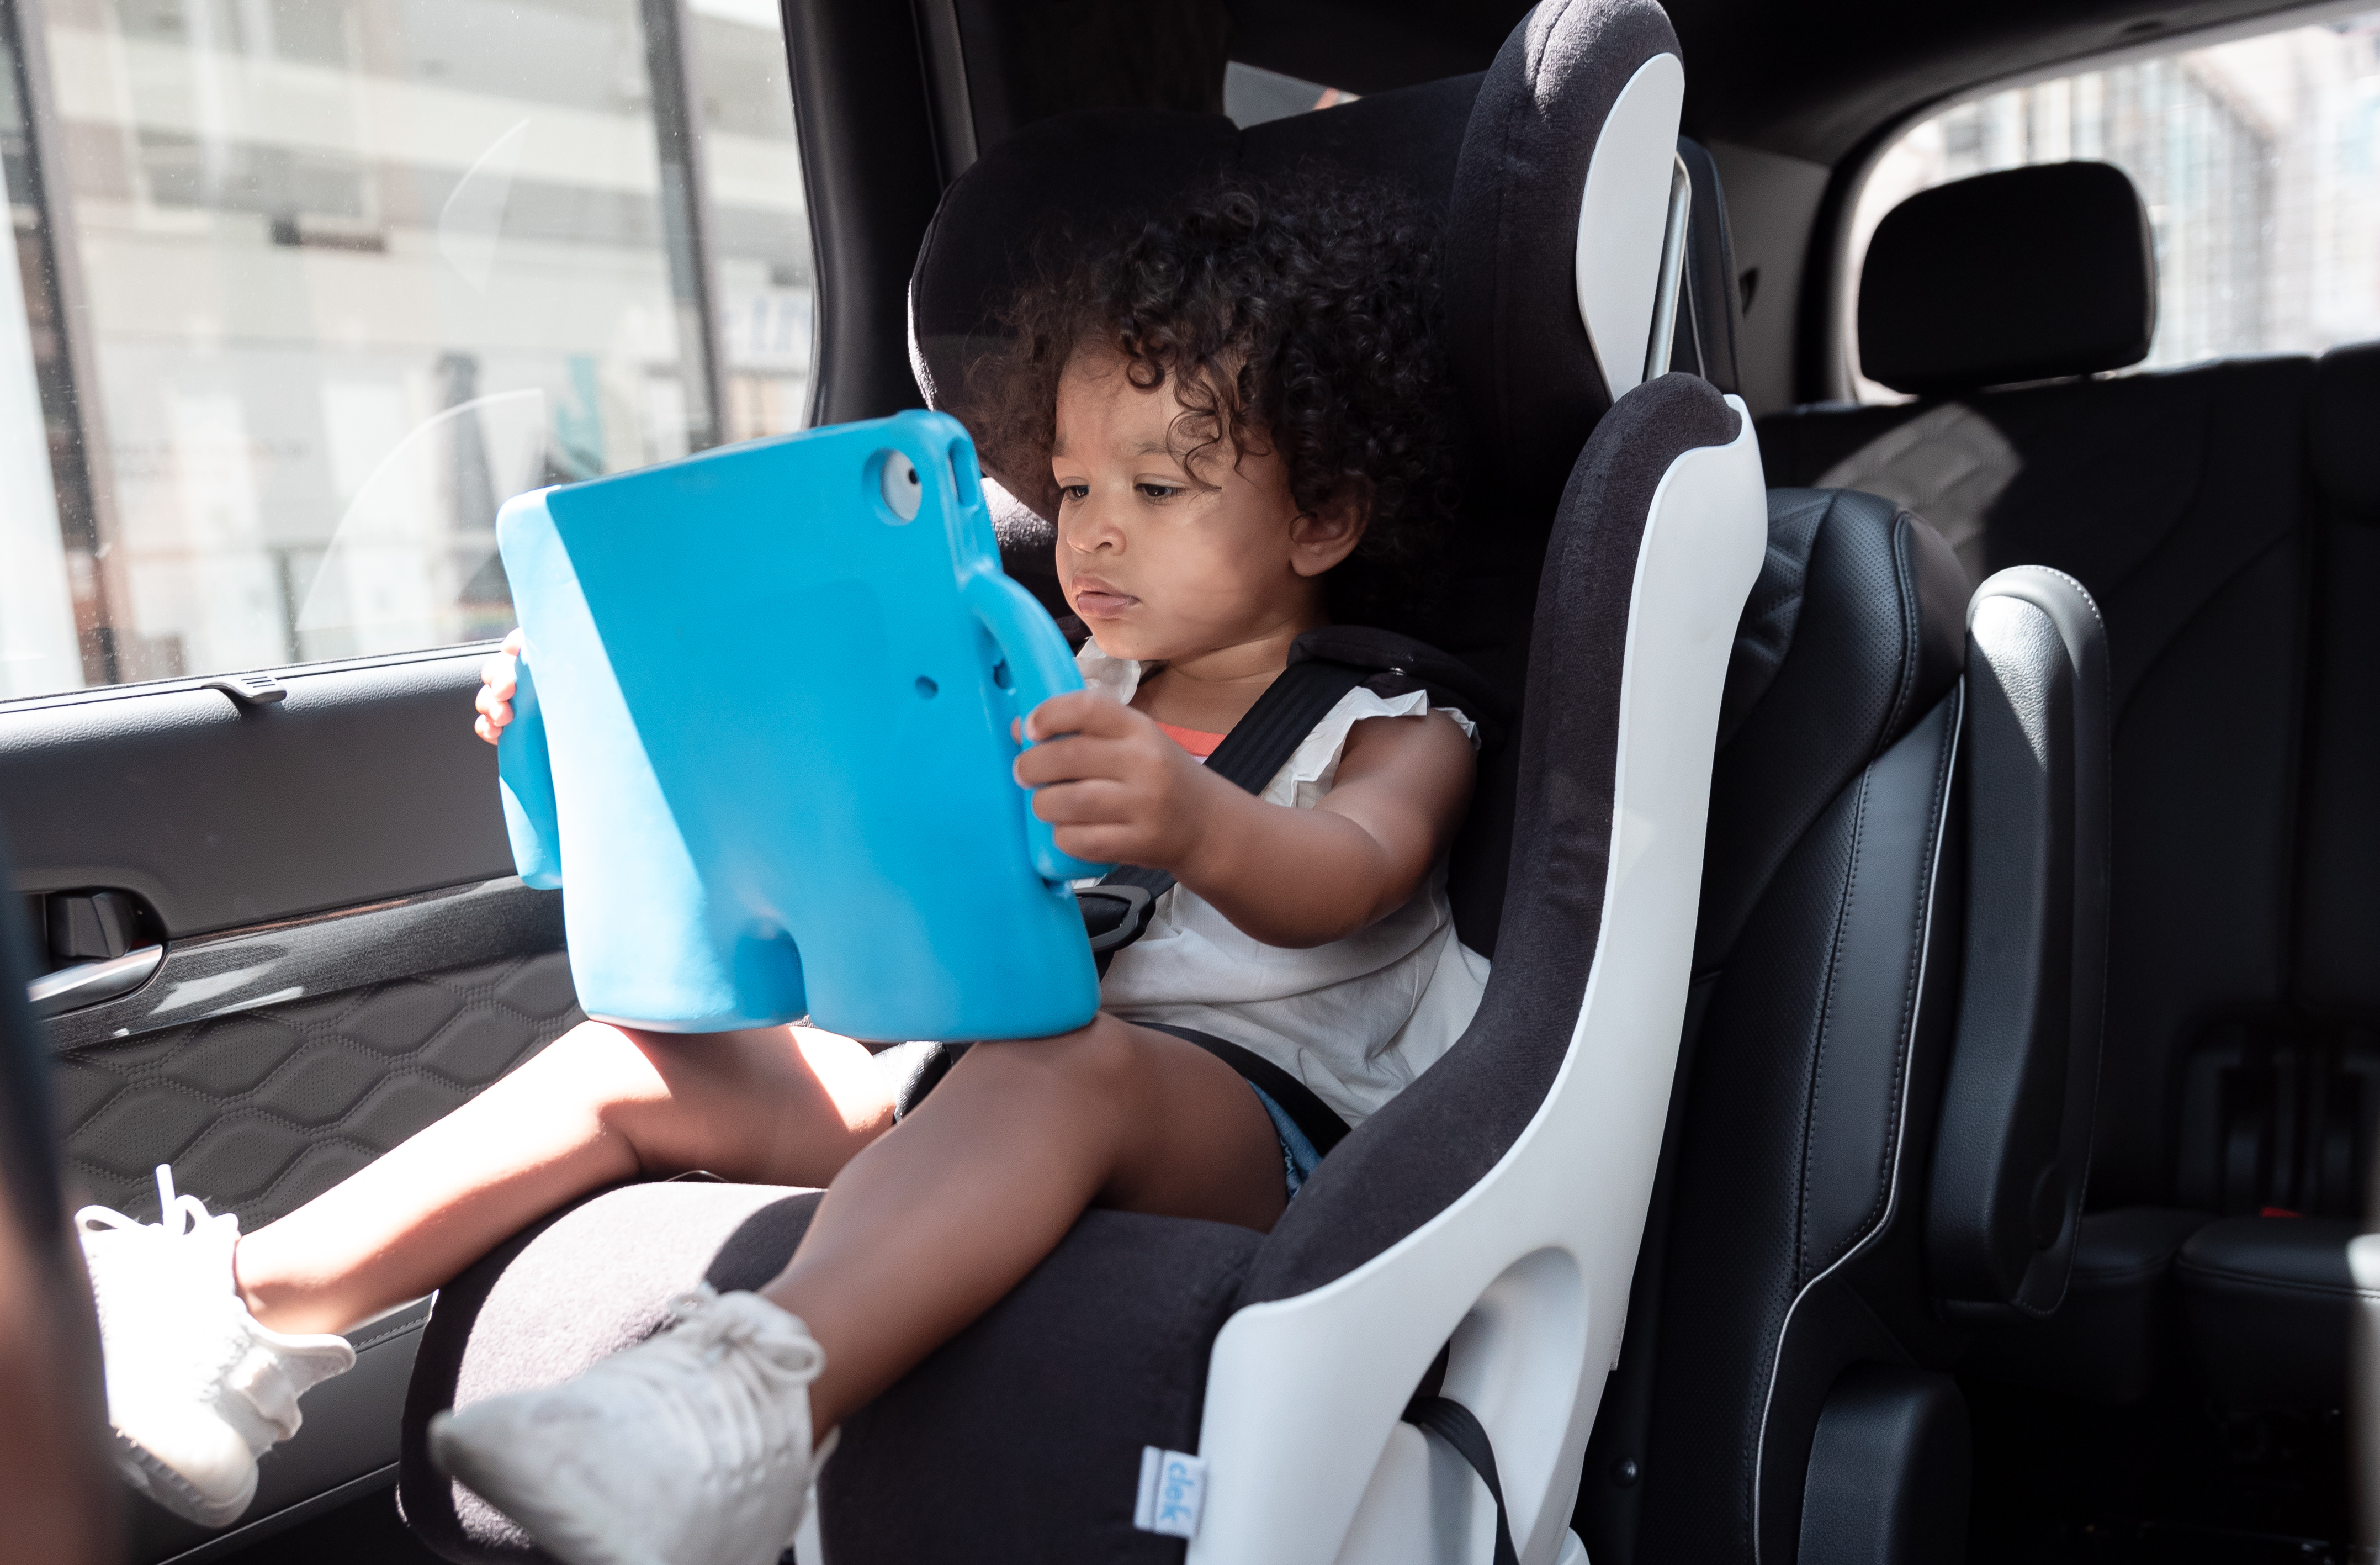 Sasha's toddler daughter in car seat holding an ipad